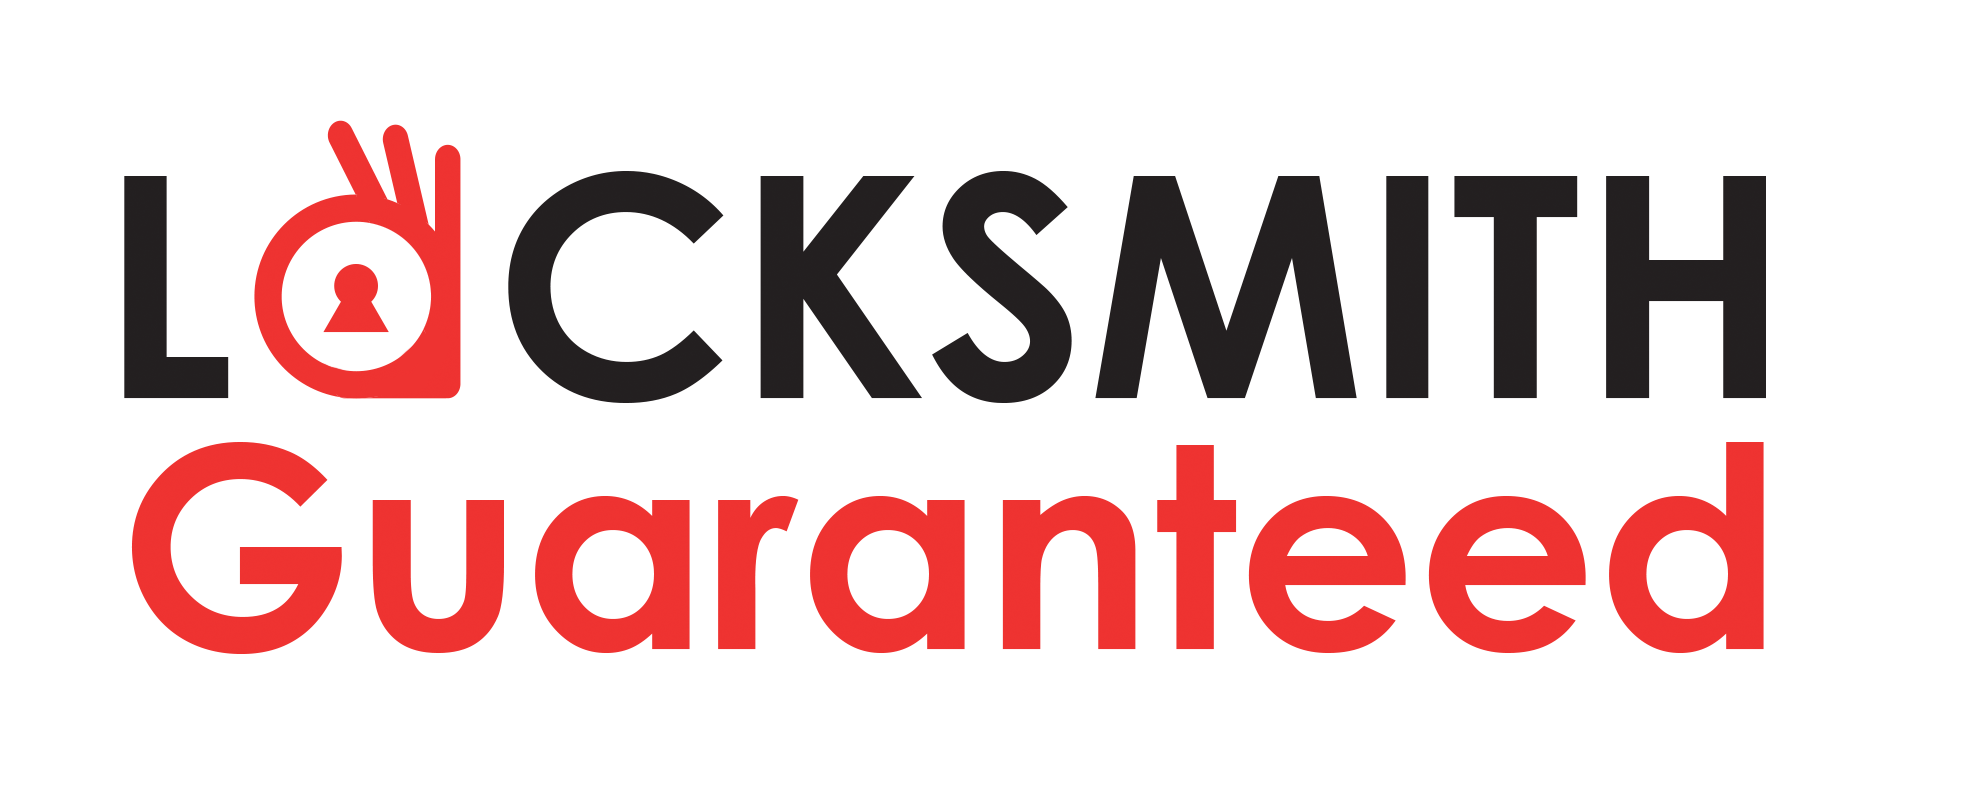 Locksmith Guaranteed LLC's Logo